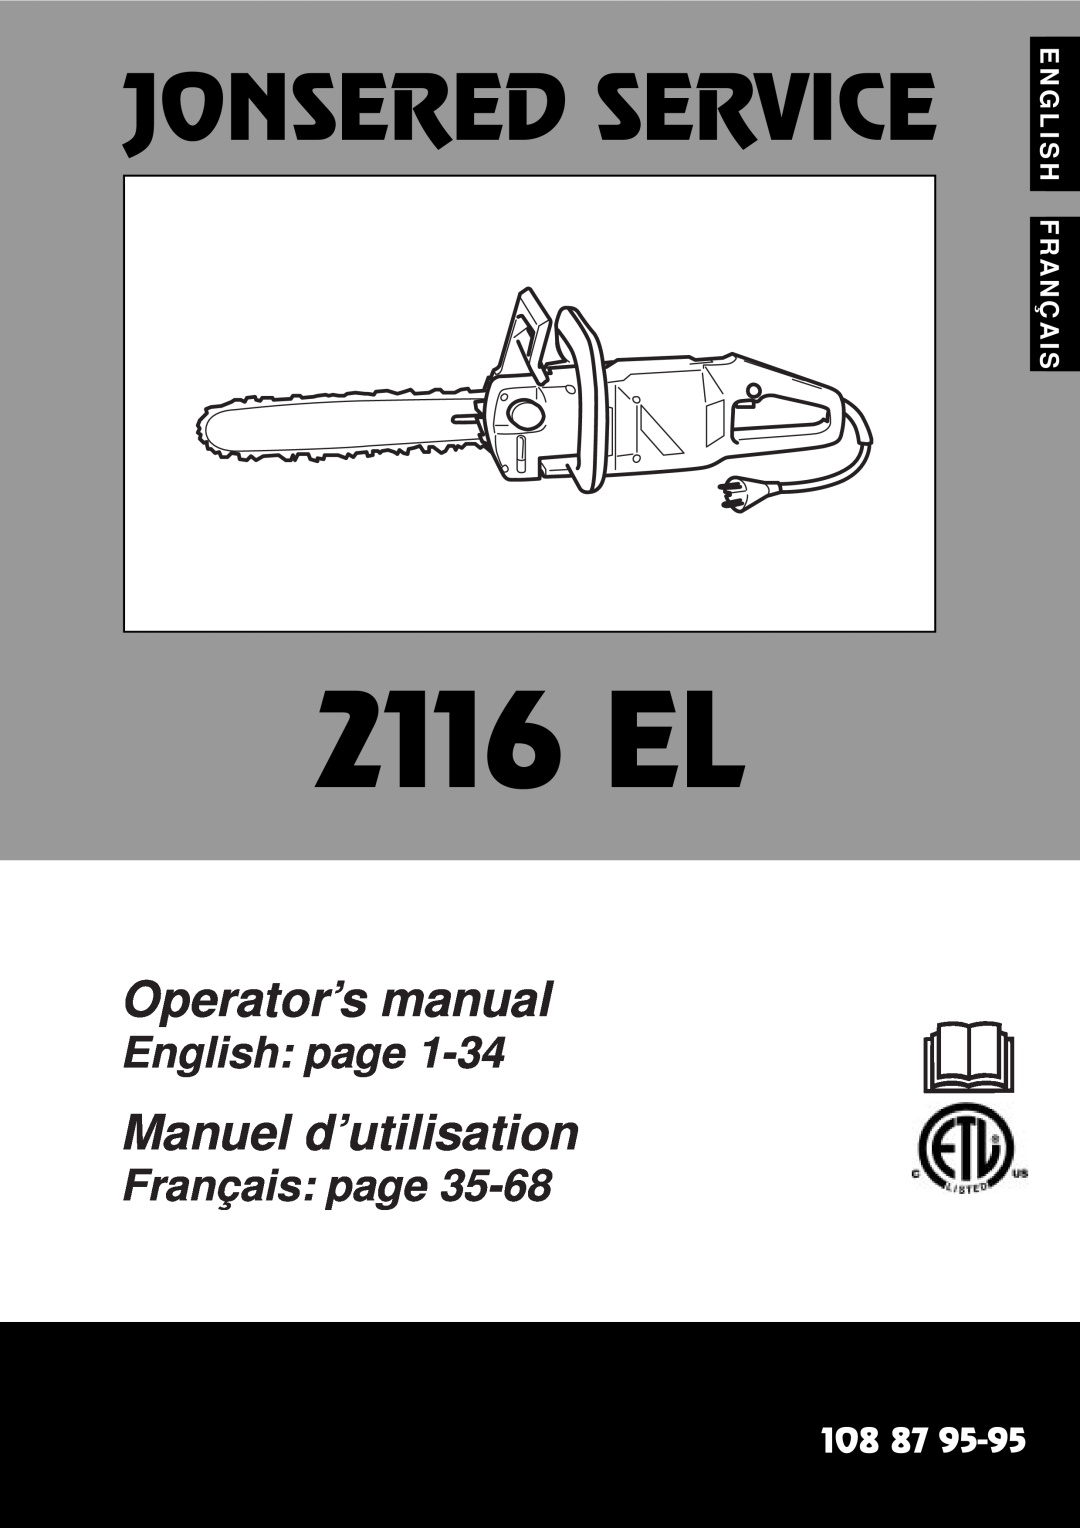 Jonsered 2116 EL manuel dutilisation Jonsered Service, Operator’s manual, Manuel d’utilisation, English page, 108 